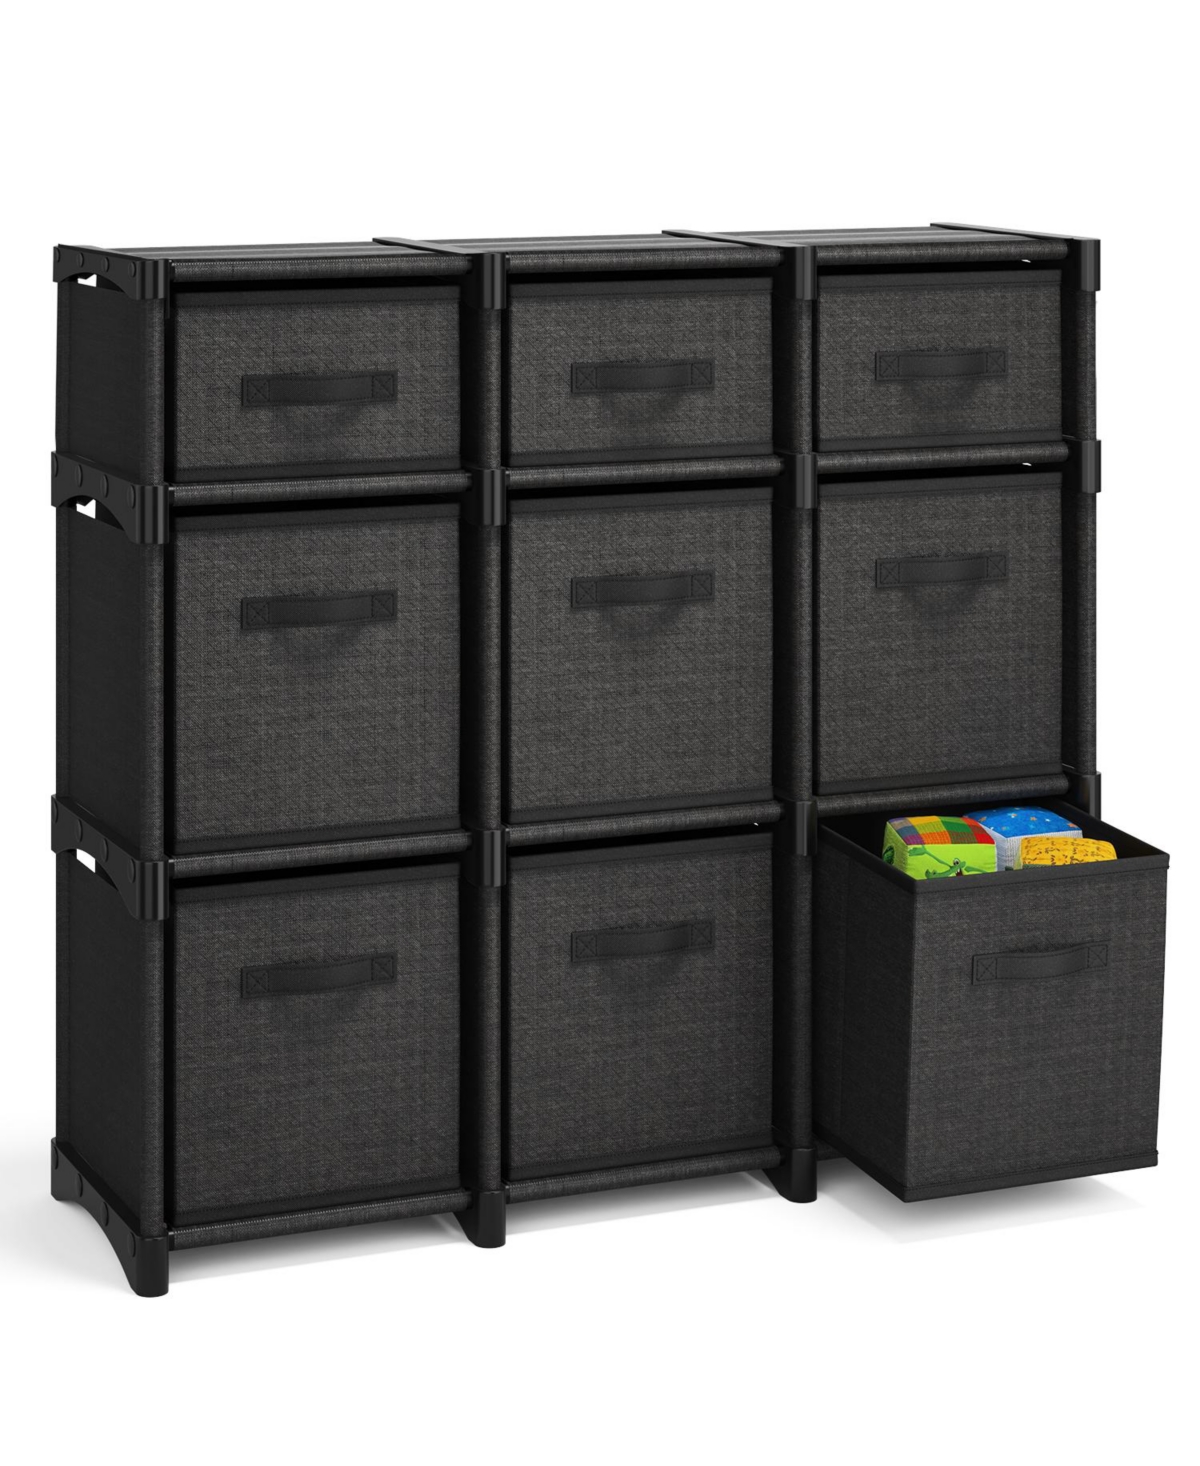 Heavy Duty 9 Cube Storage Organizer with Fabric Storage Bins - Black